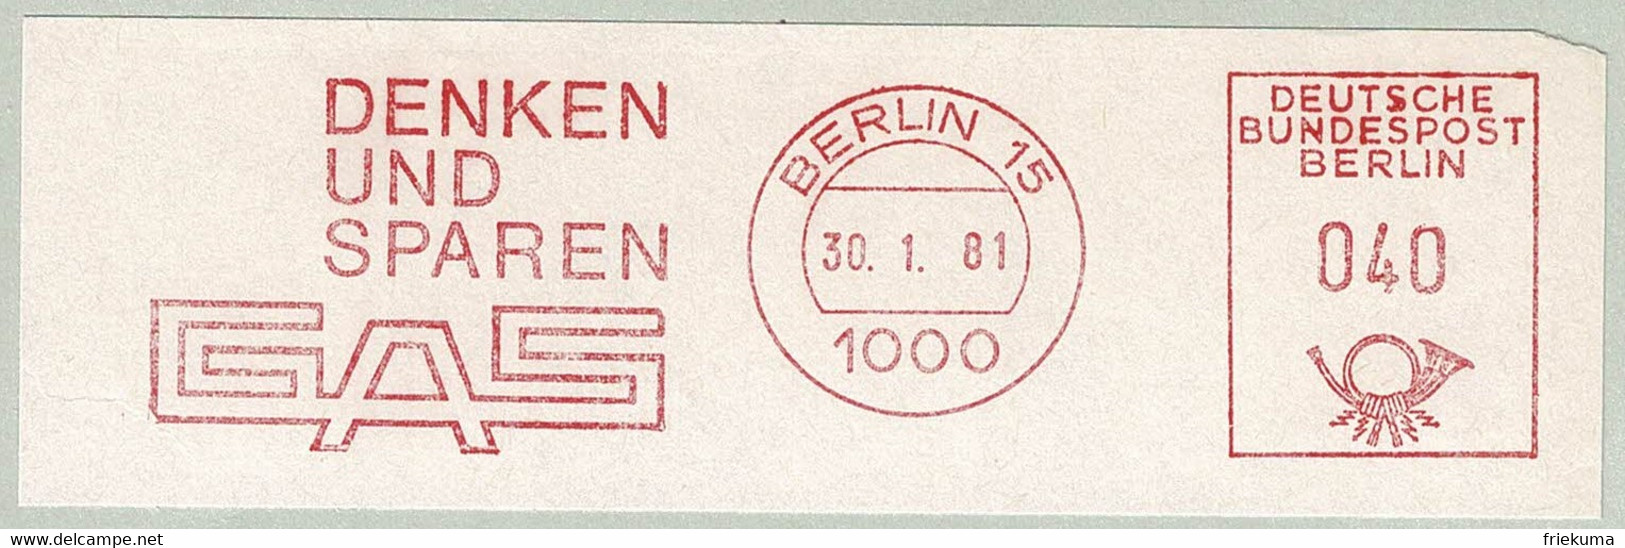 Deutsche Bundespost 1981, Freistempel / EMA / Meterstamp Gas / Gaz Berlin, Energie / Energy - Gas